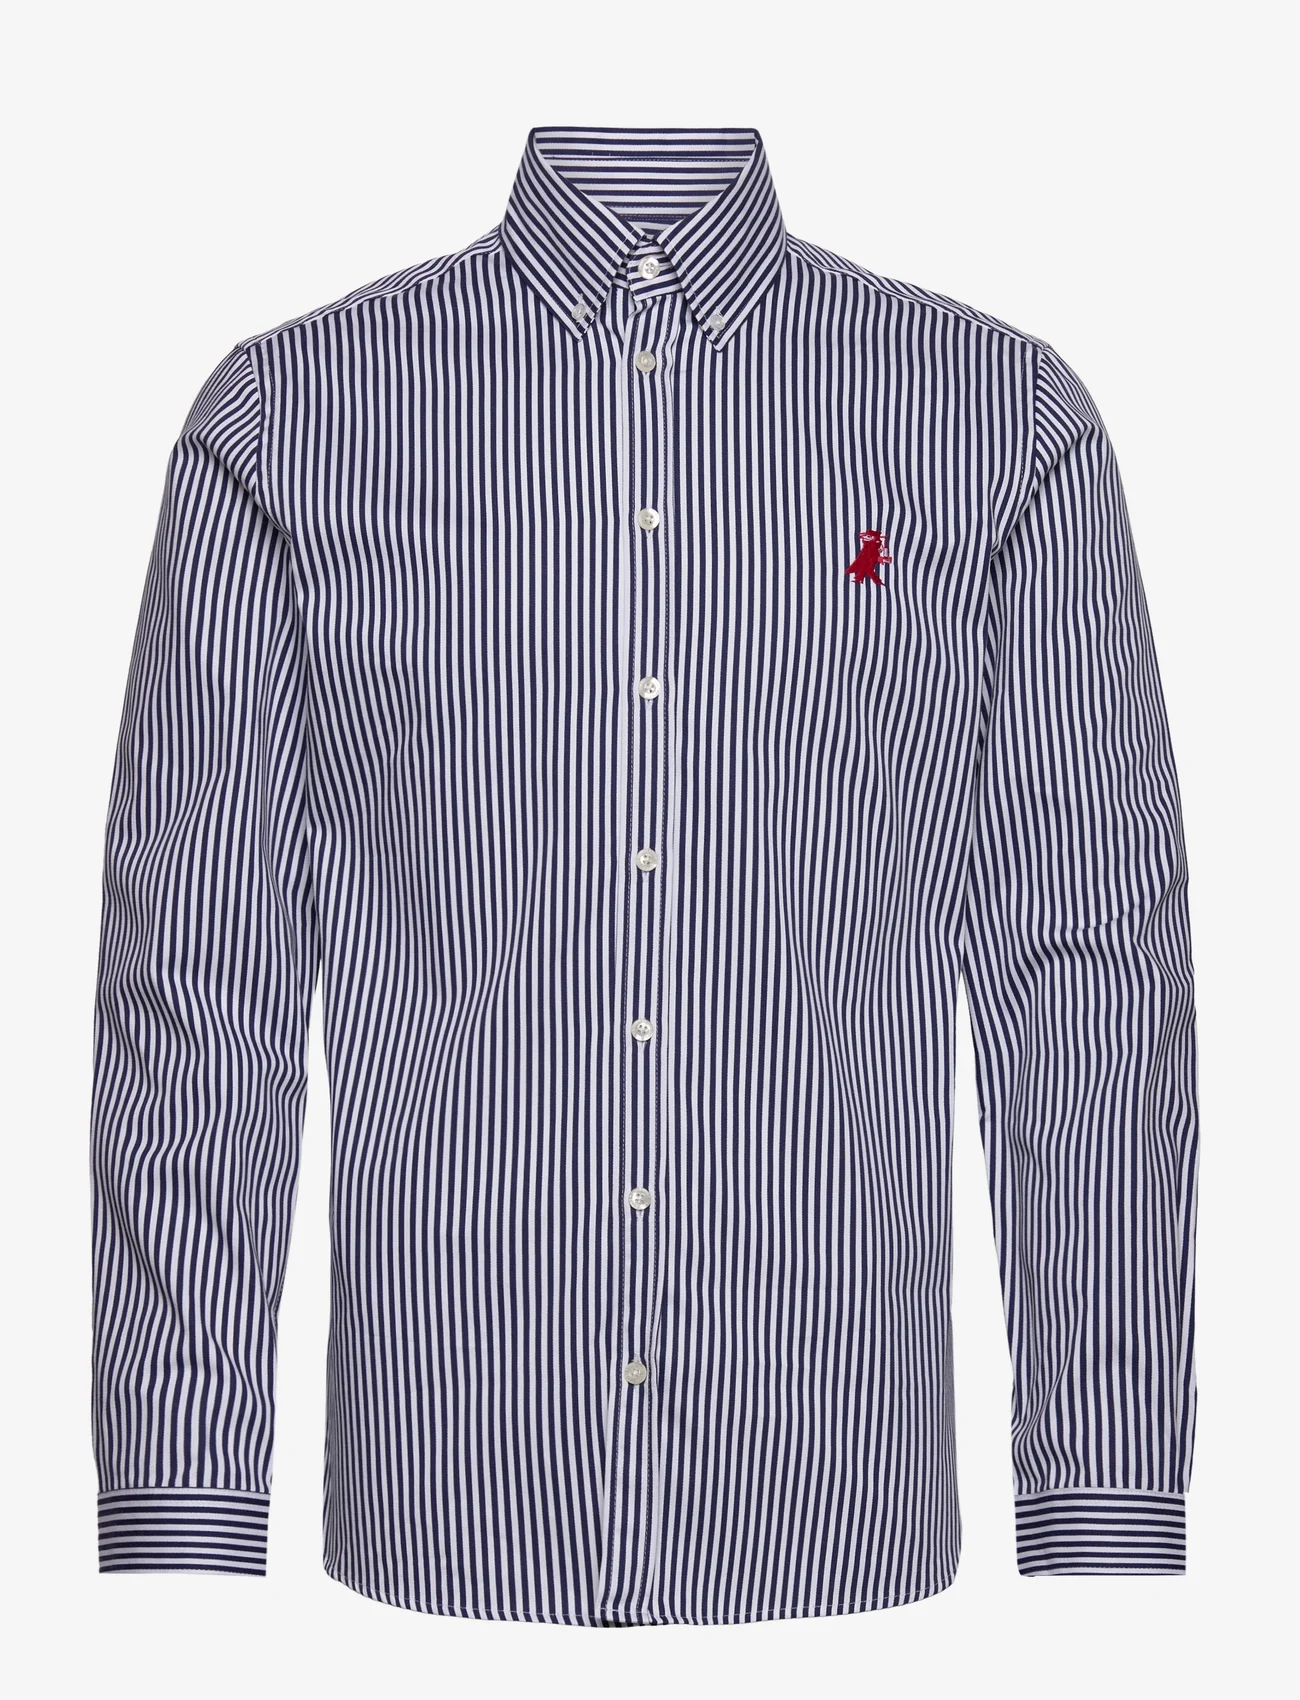 Libertine-Libertine - Voleur Shirt - business shirts - white & navy stripe - 0